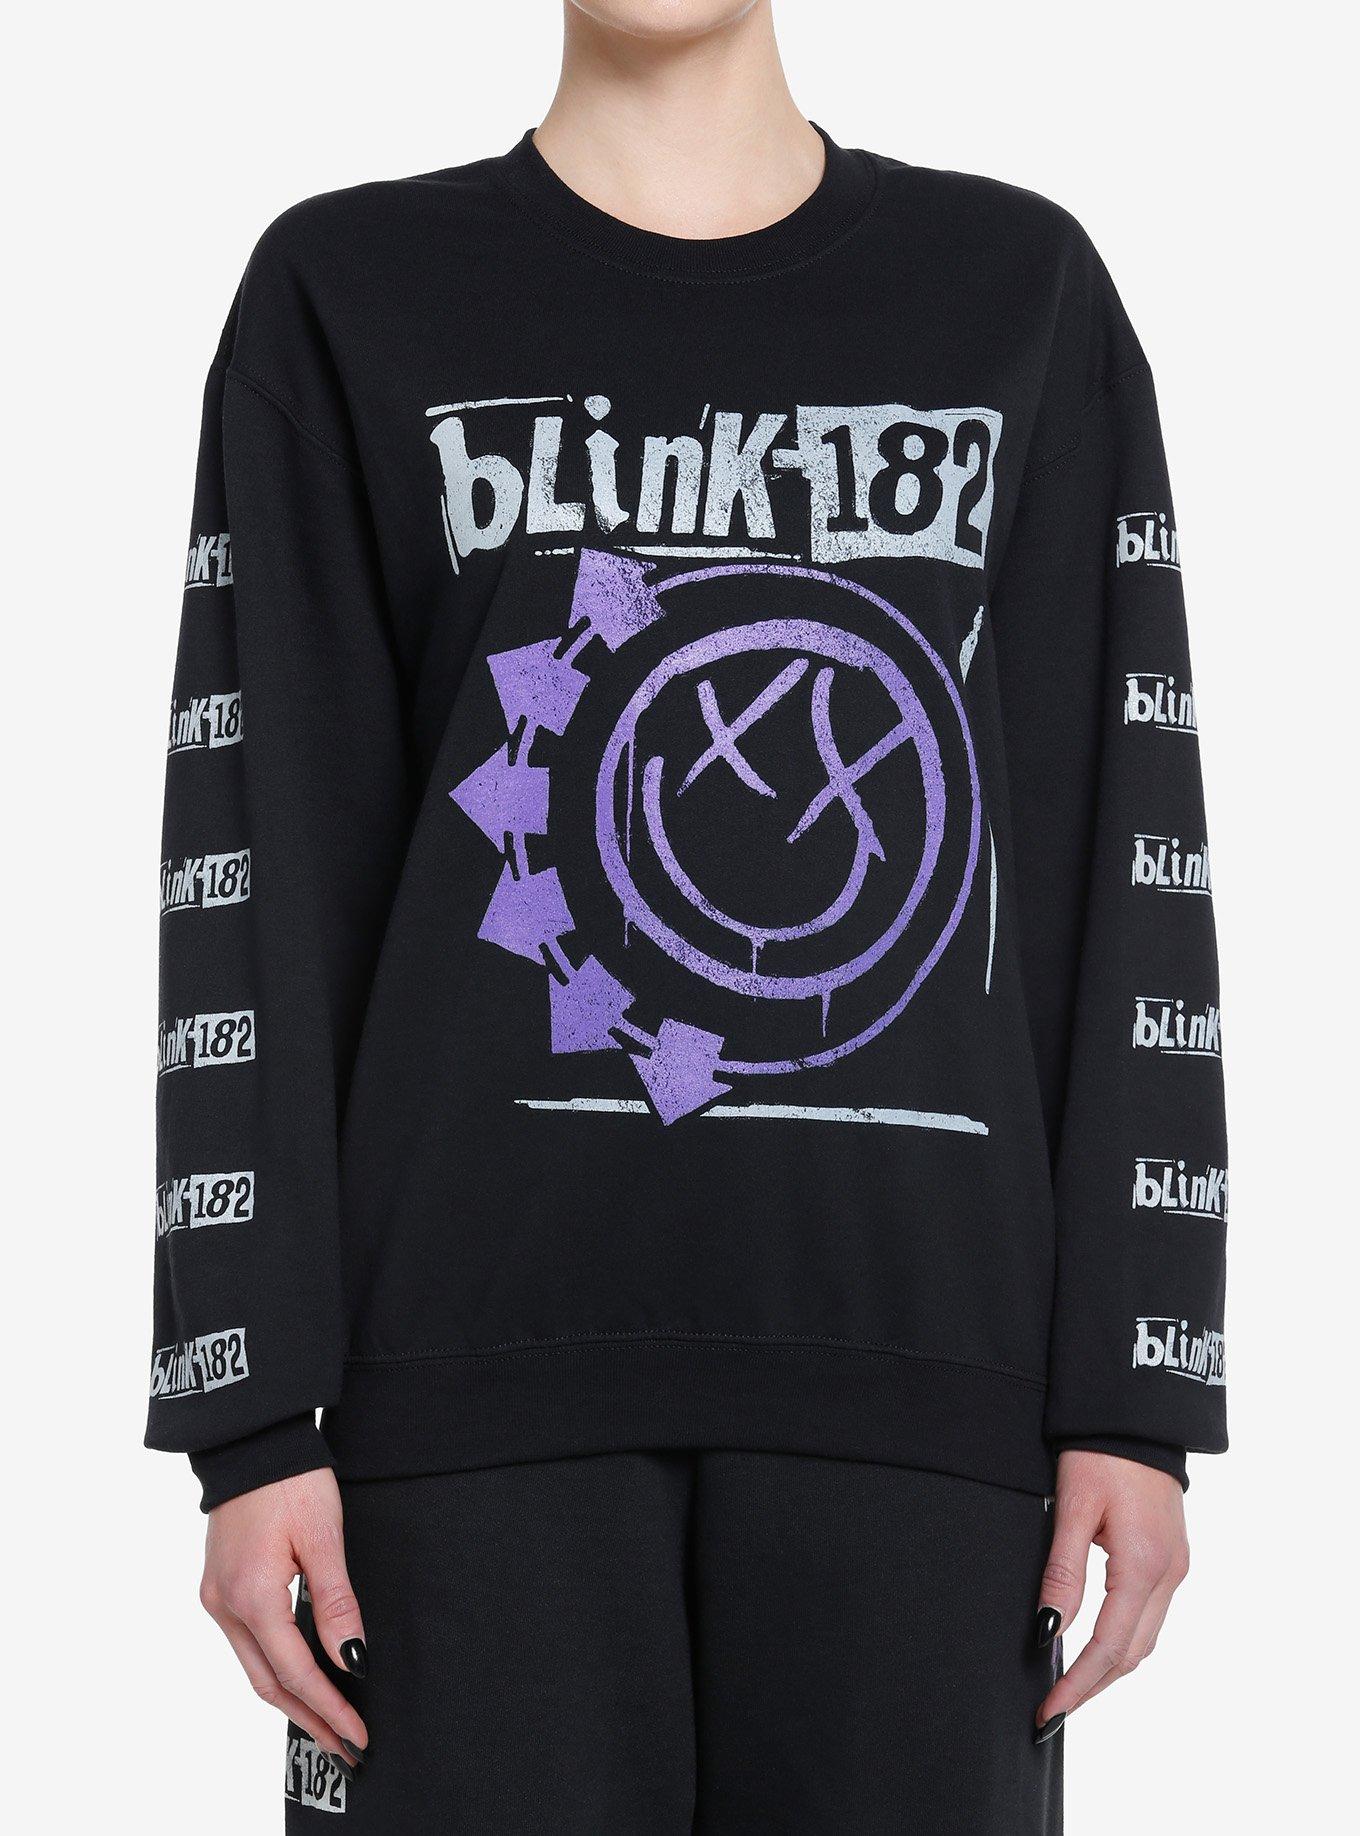 Blink-182 Smile Girls Sweatshirt, BLACK, hi-res